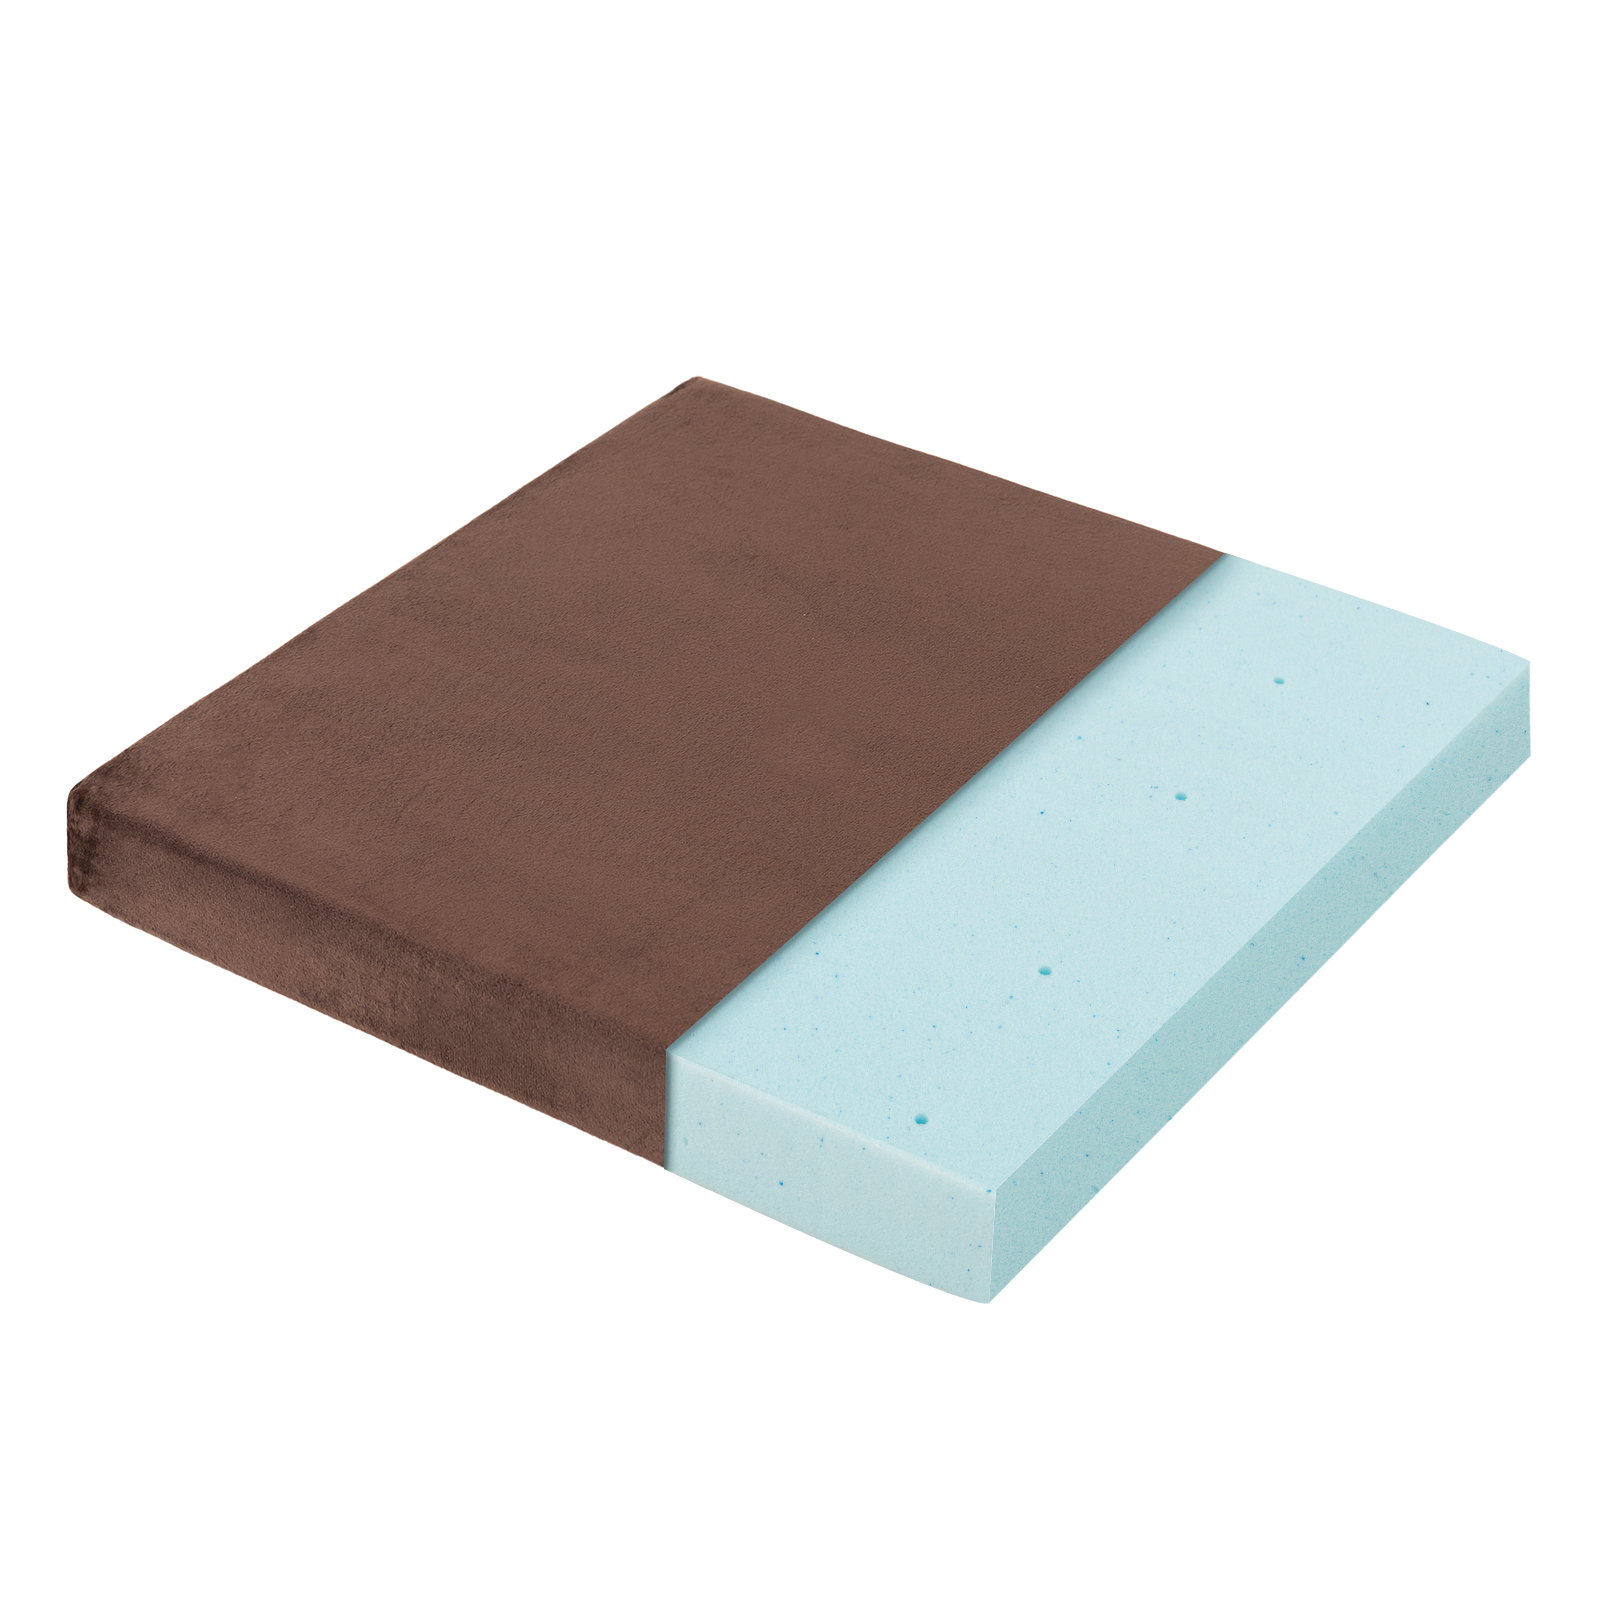 18 x 18 Inches Memory Foam Seat Cushions-Brown